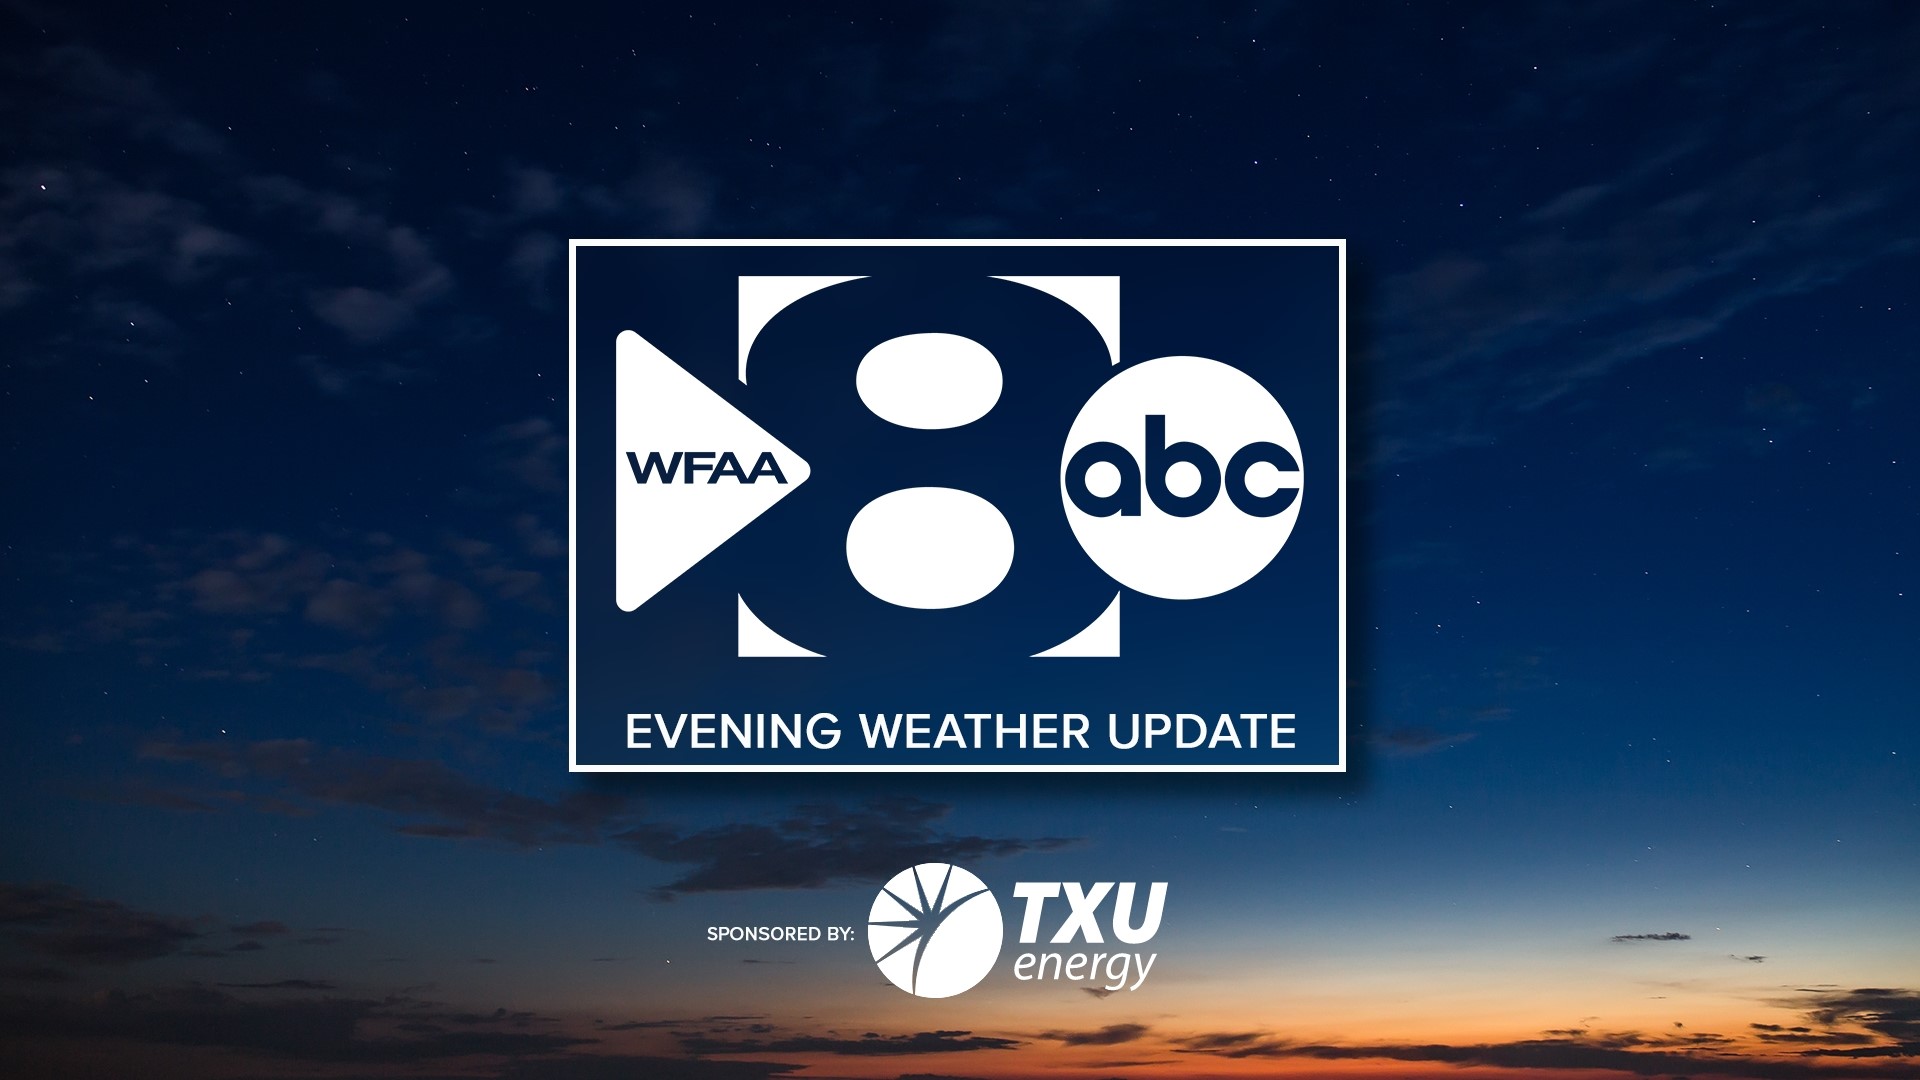 DFW WEATHER: October 2 evening forecast update